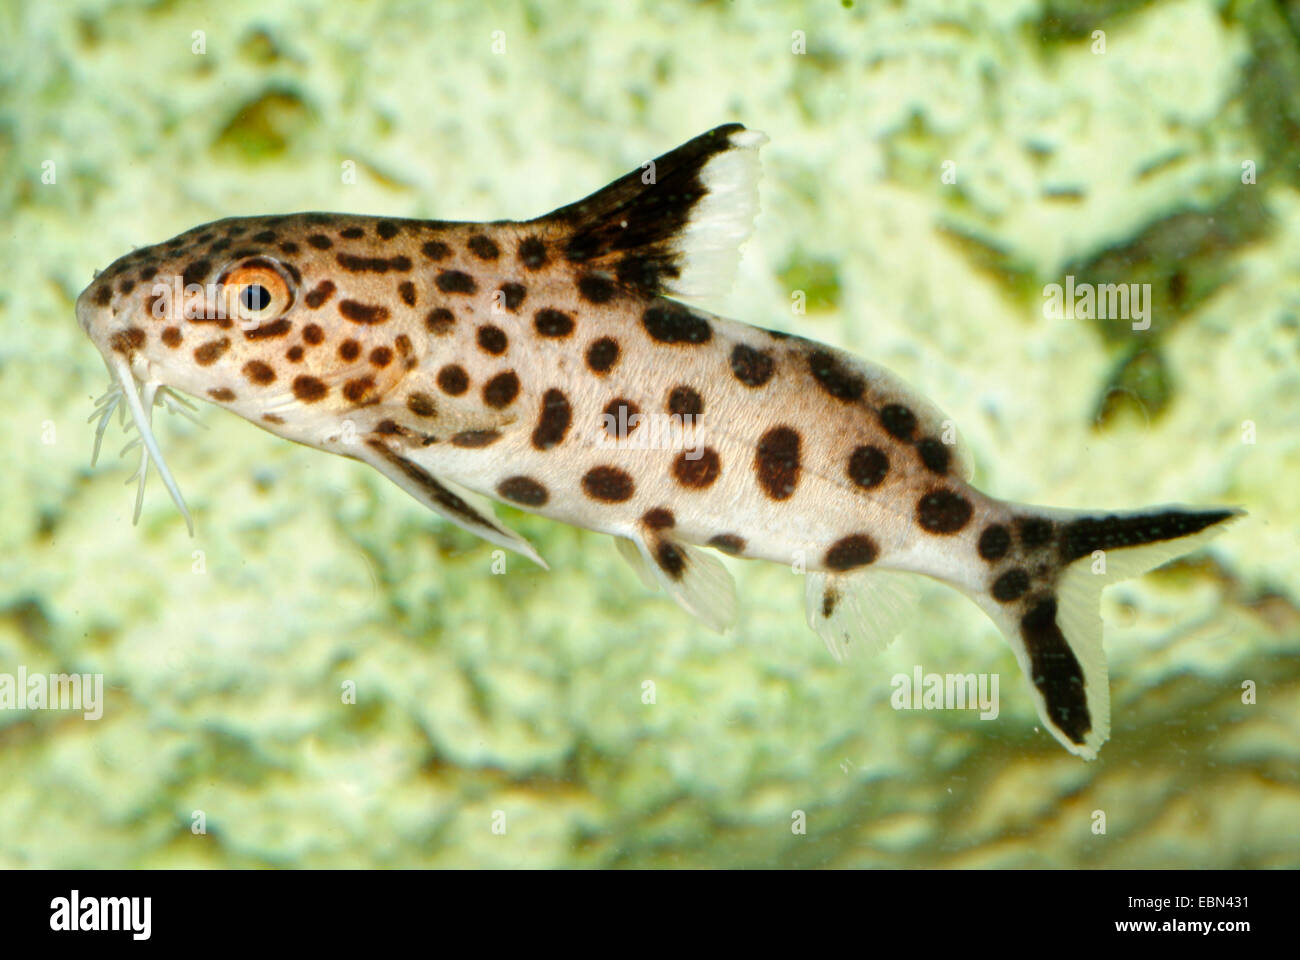 Cuckoo syndontis, Multi-spotted synodontis (Synodontis multipunctatus), swimming Stock Photo